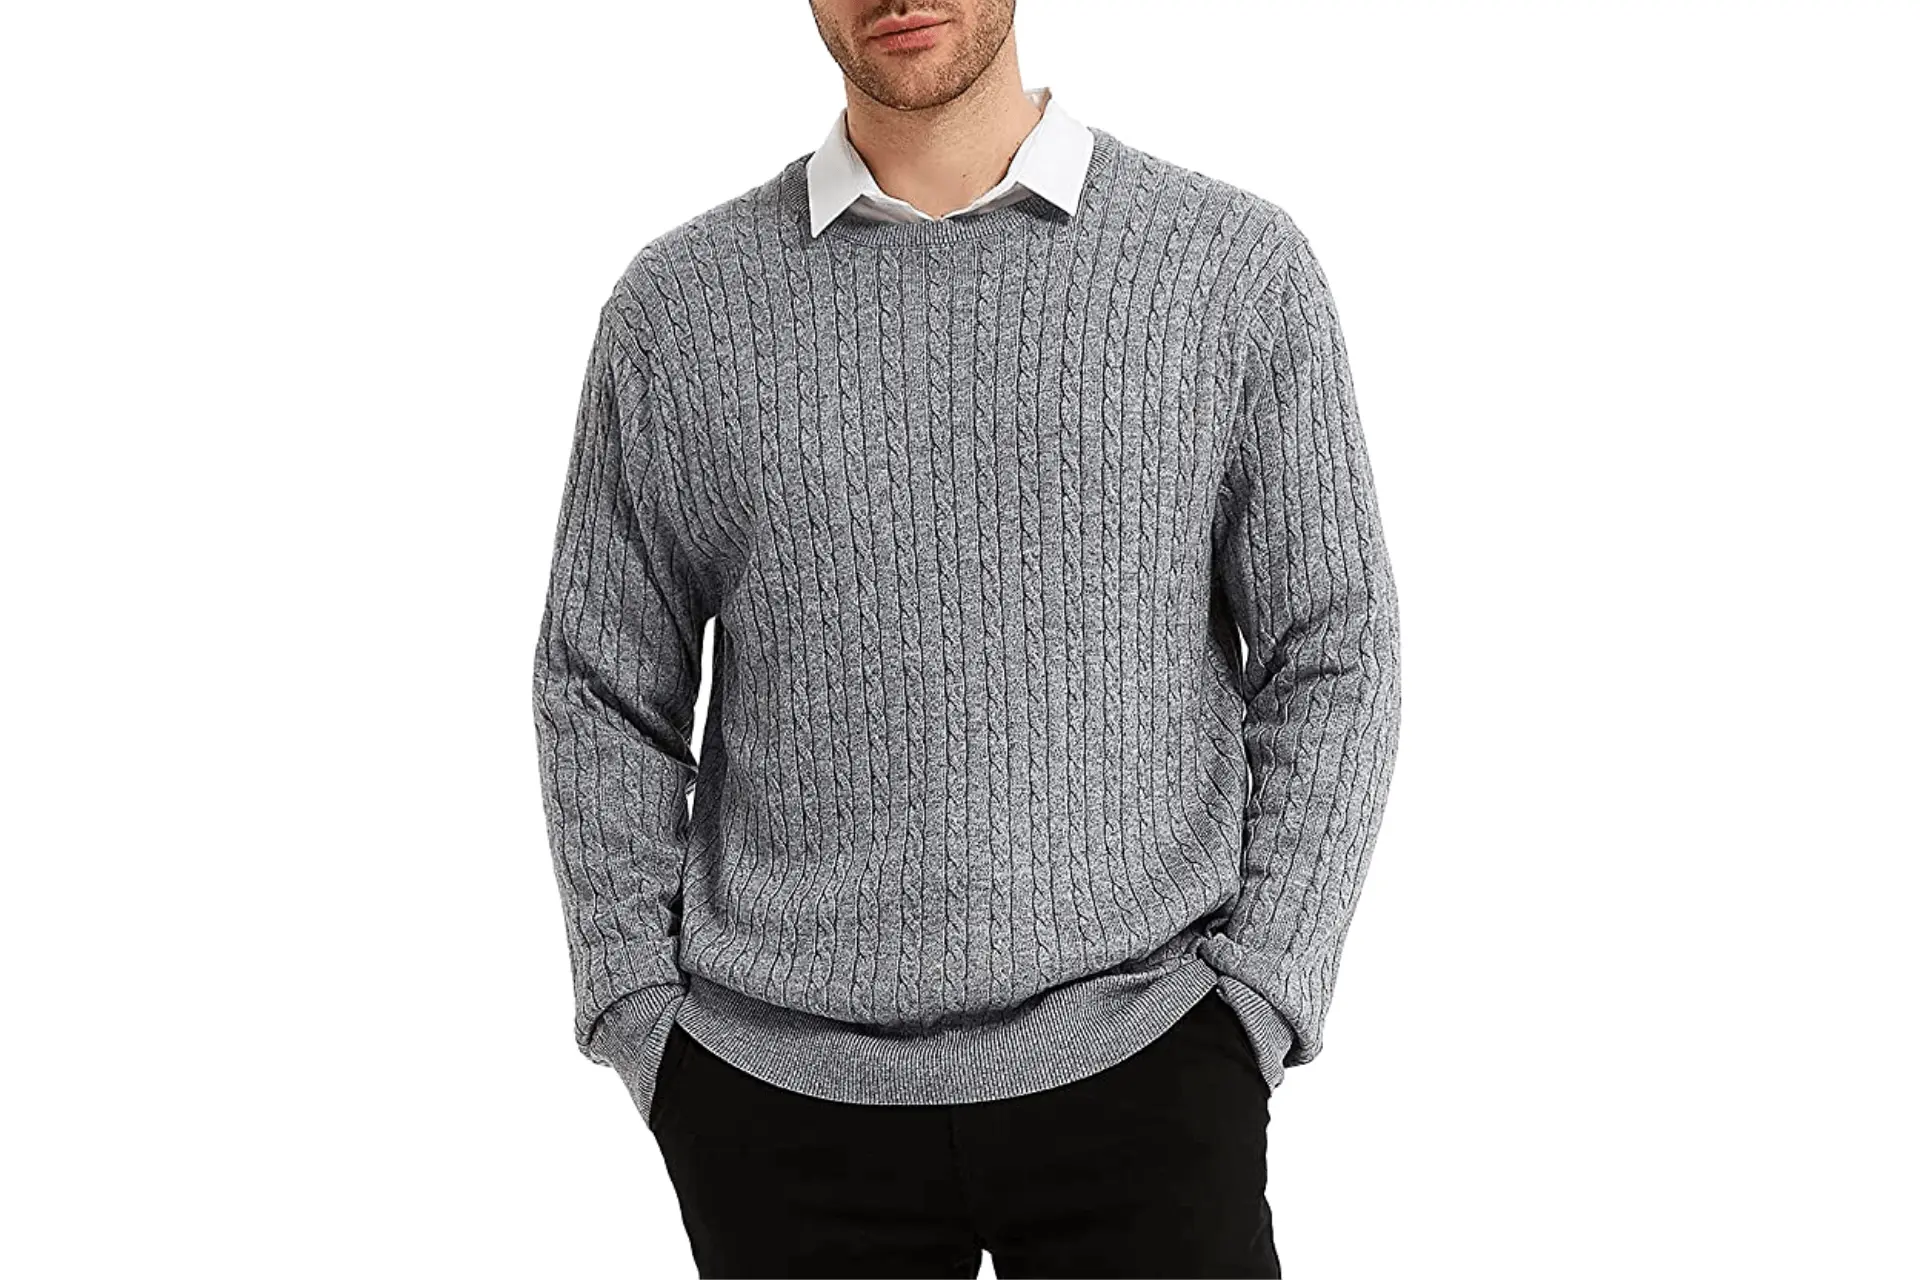 Kallspin Men's Cable Knit Crewneck Sweater